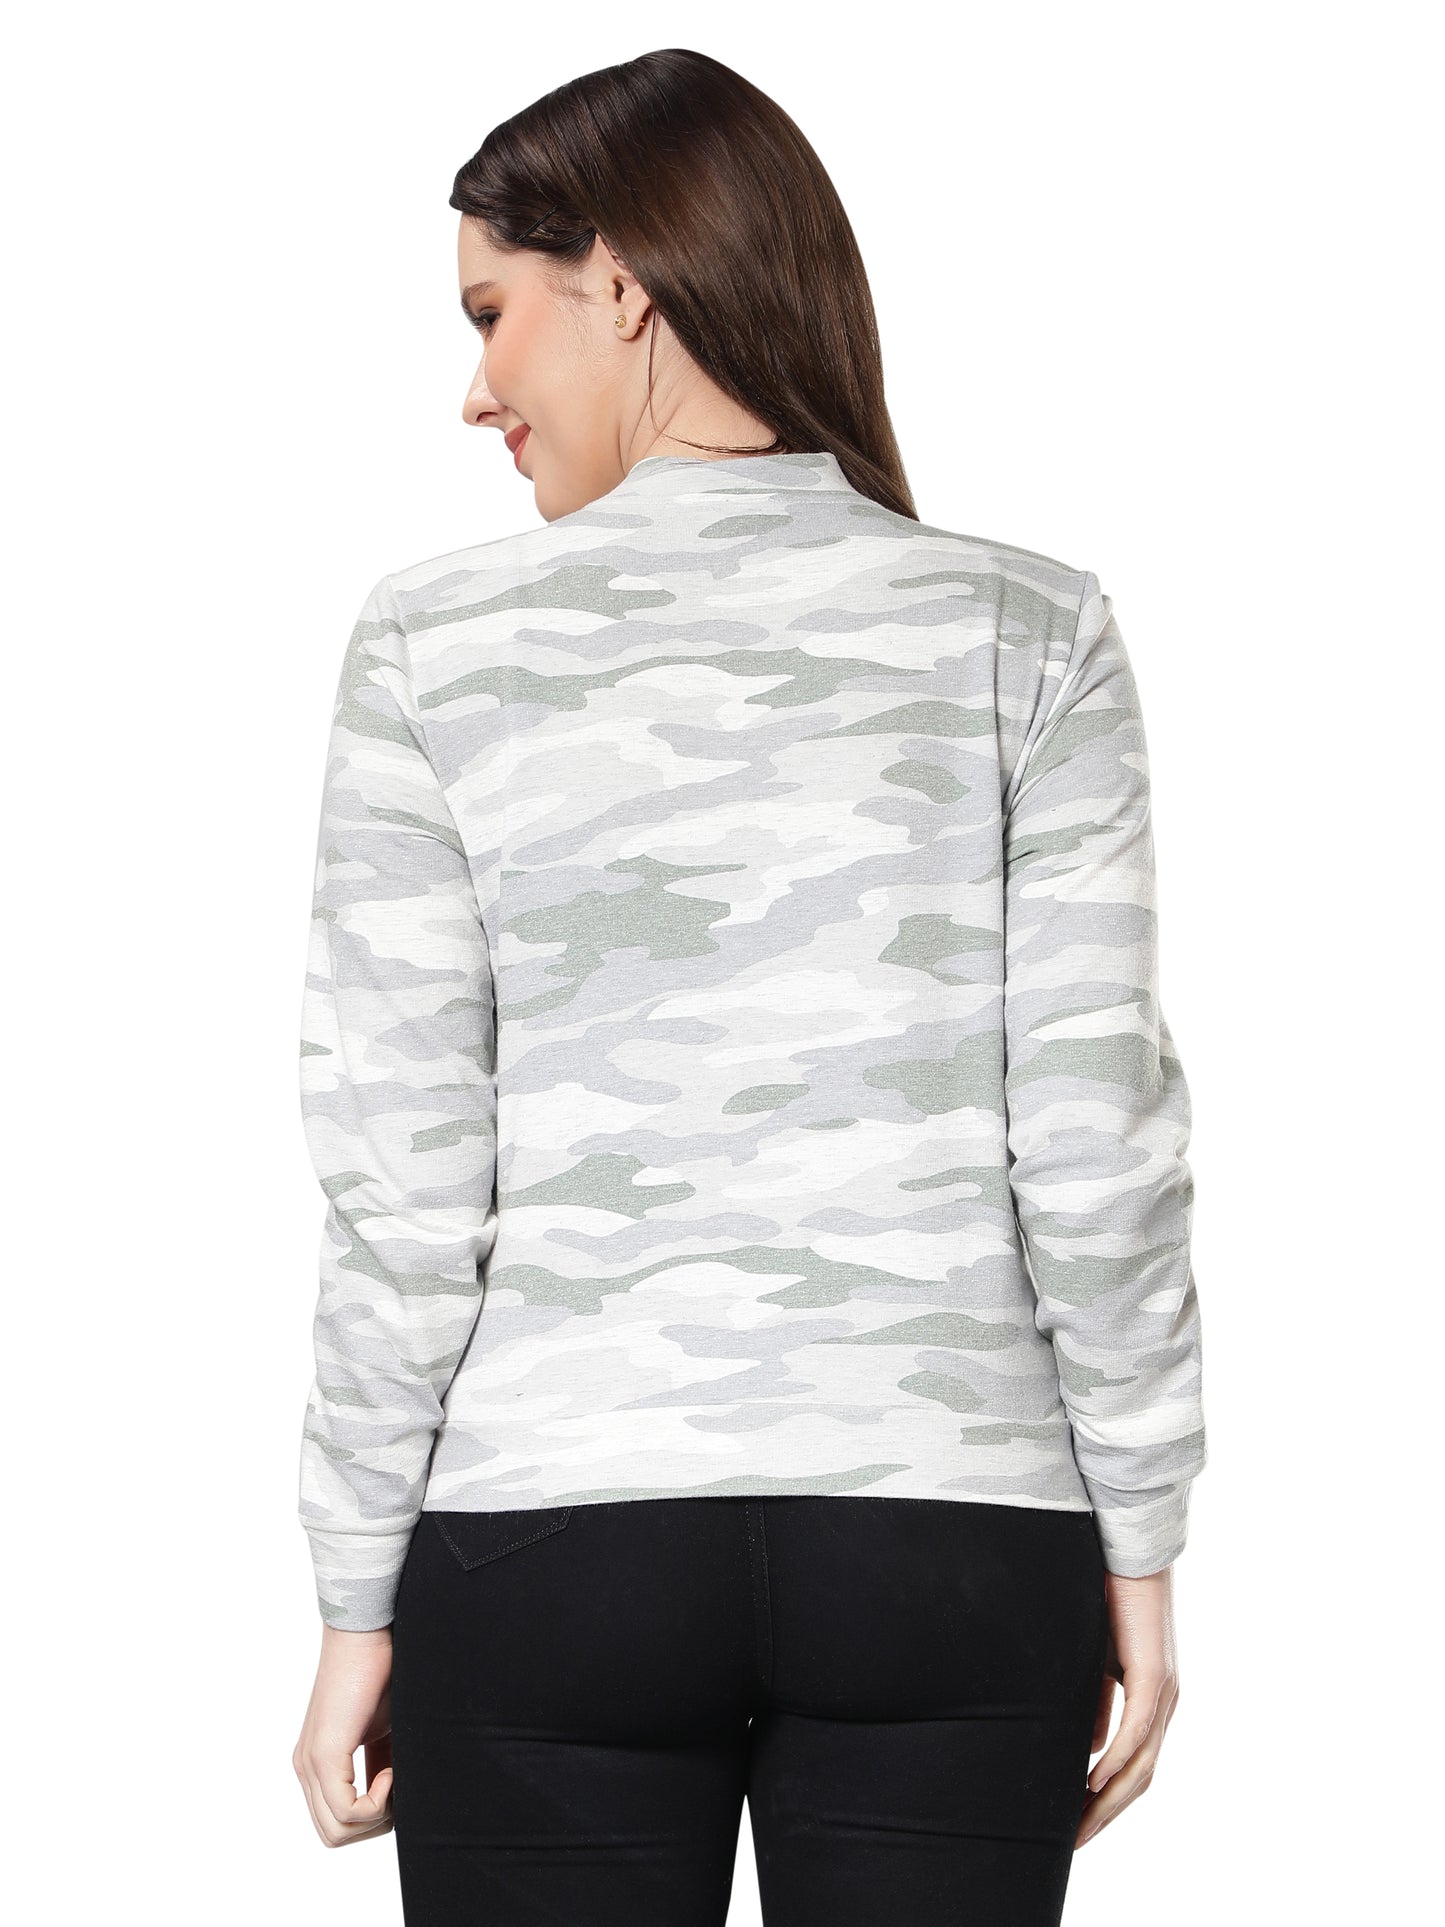 Women Camouflage Printed Grey Jacket